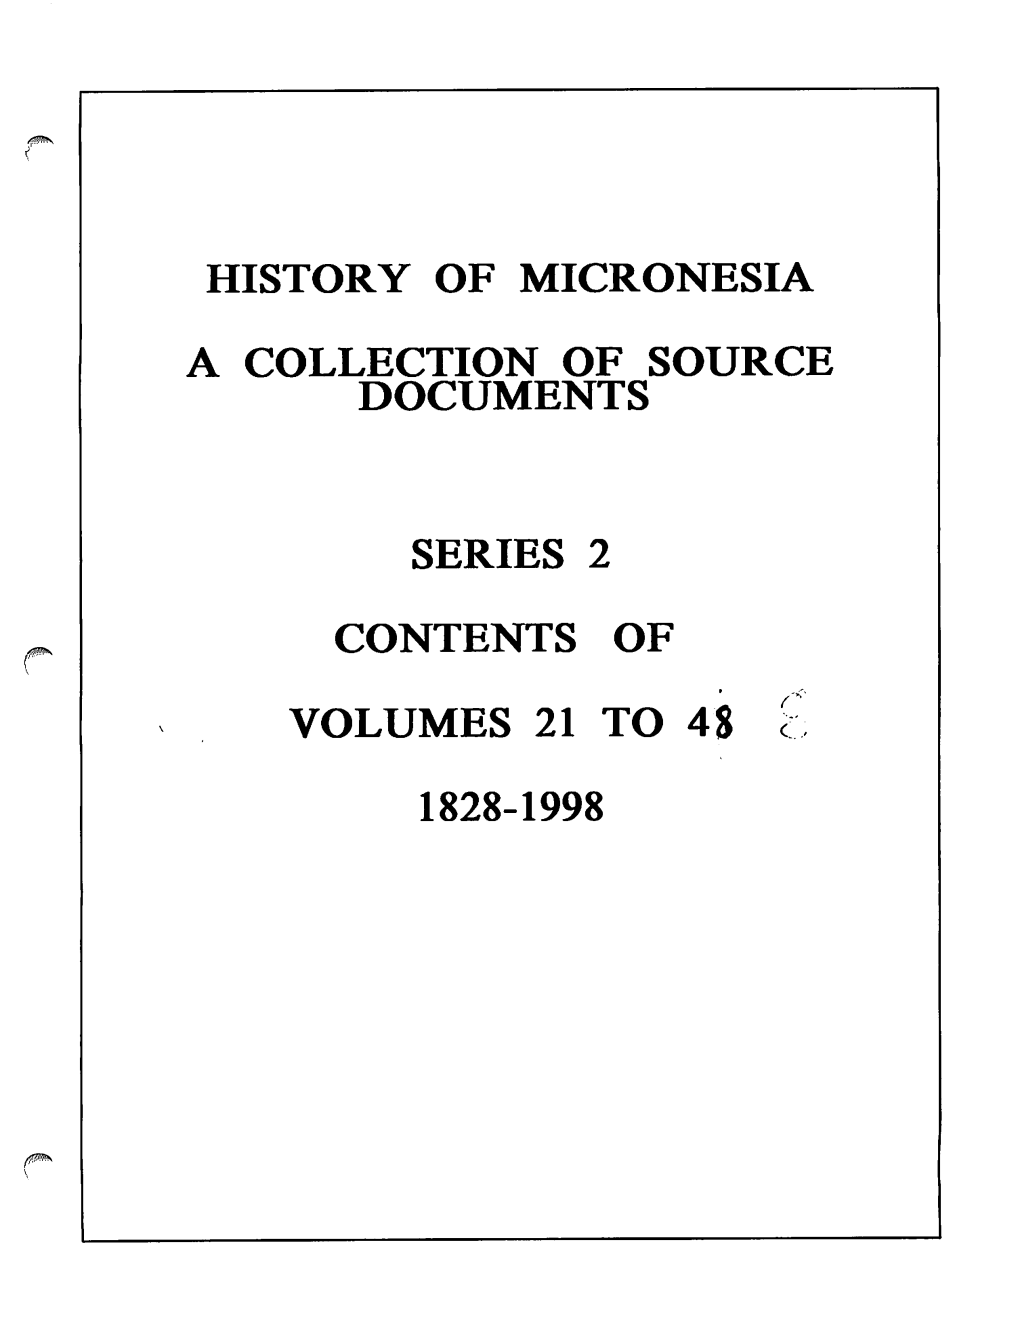 Historical Atlas of Micronesia